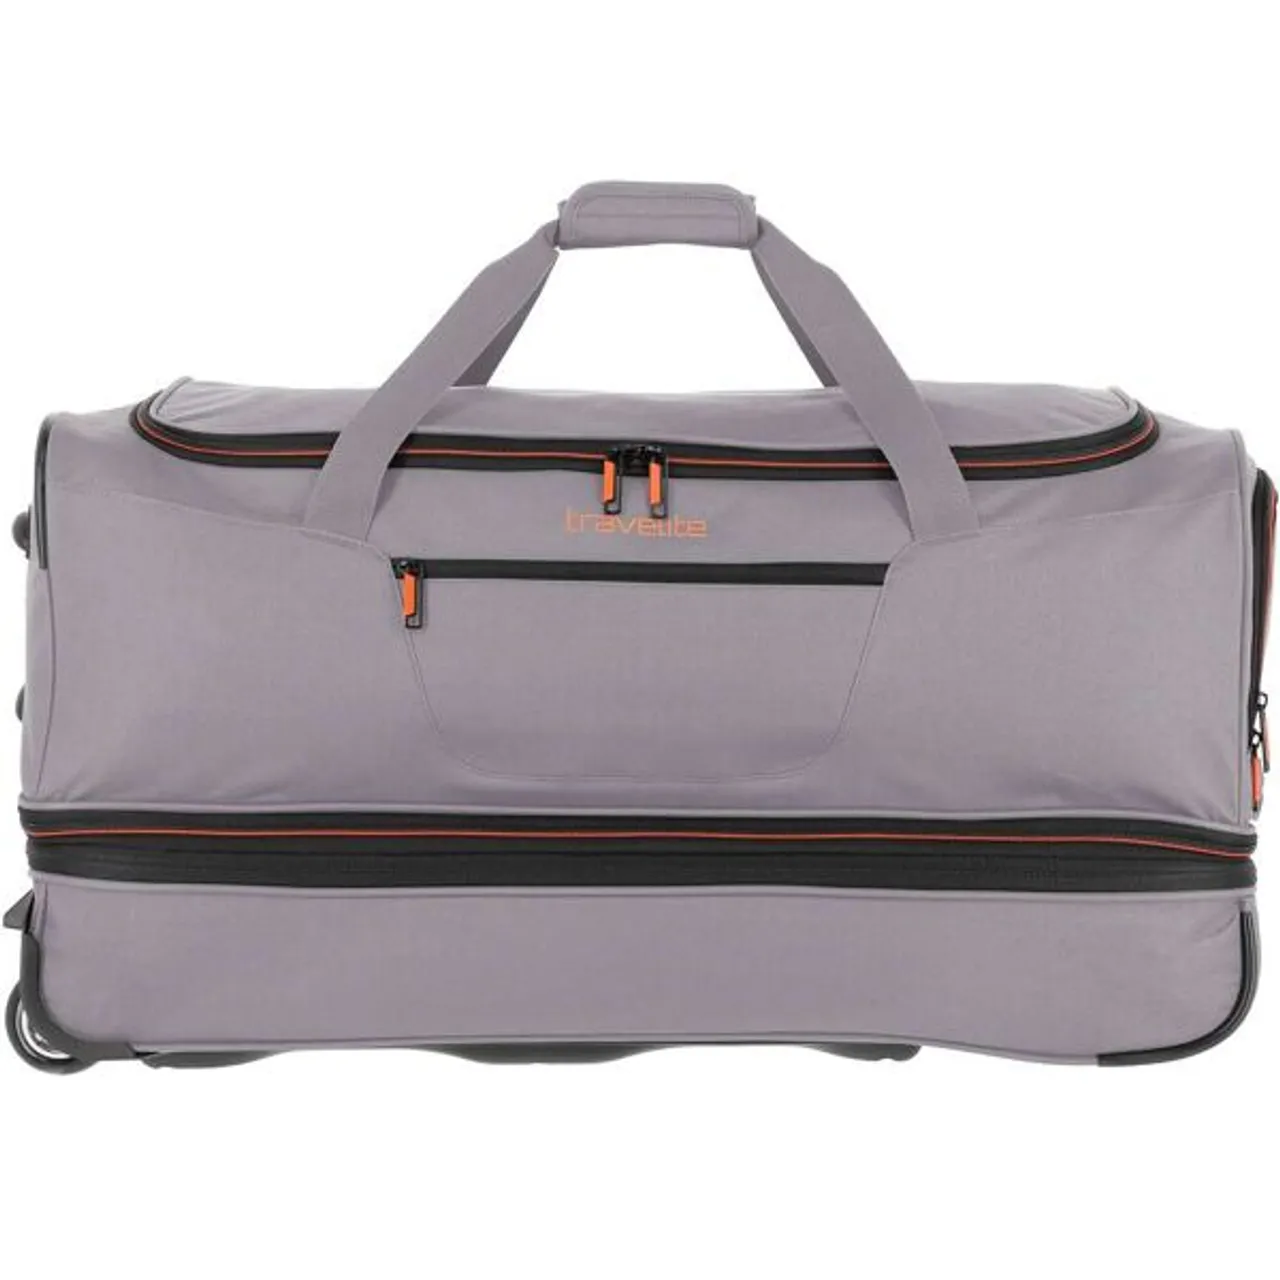 Reisetasche TRAVELITE "Basics, 70 cm, grau/orange" Gr. B/H/T: 70 cm x 46 cm x 37 cm, grau (grau, orange) Taschen Reisetaschen